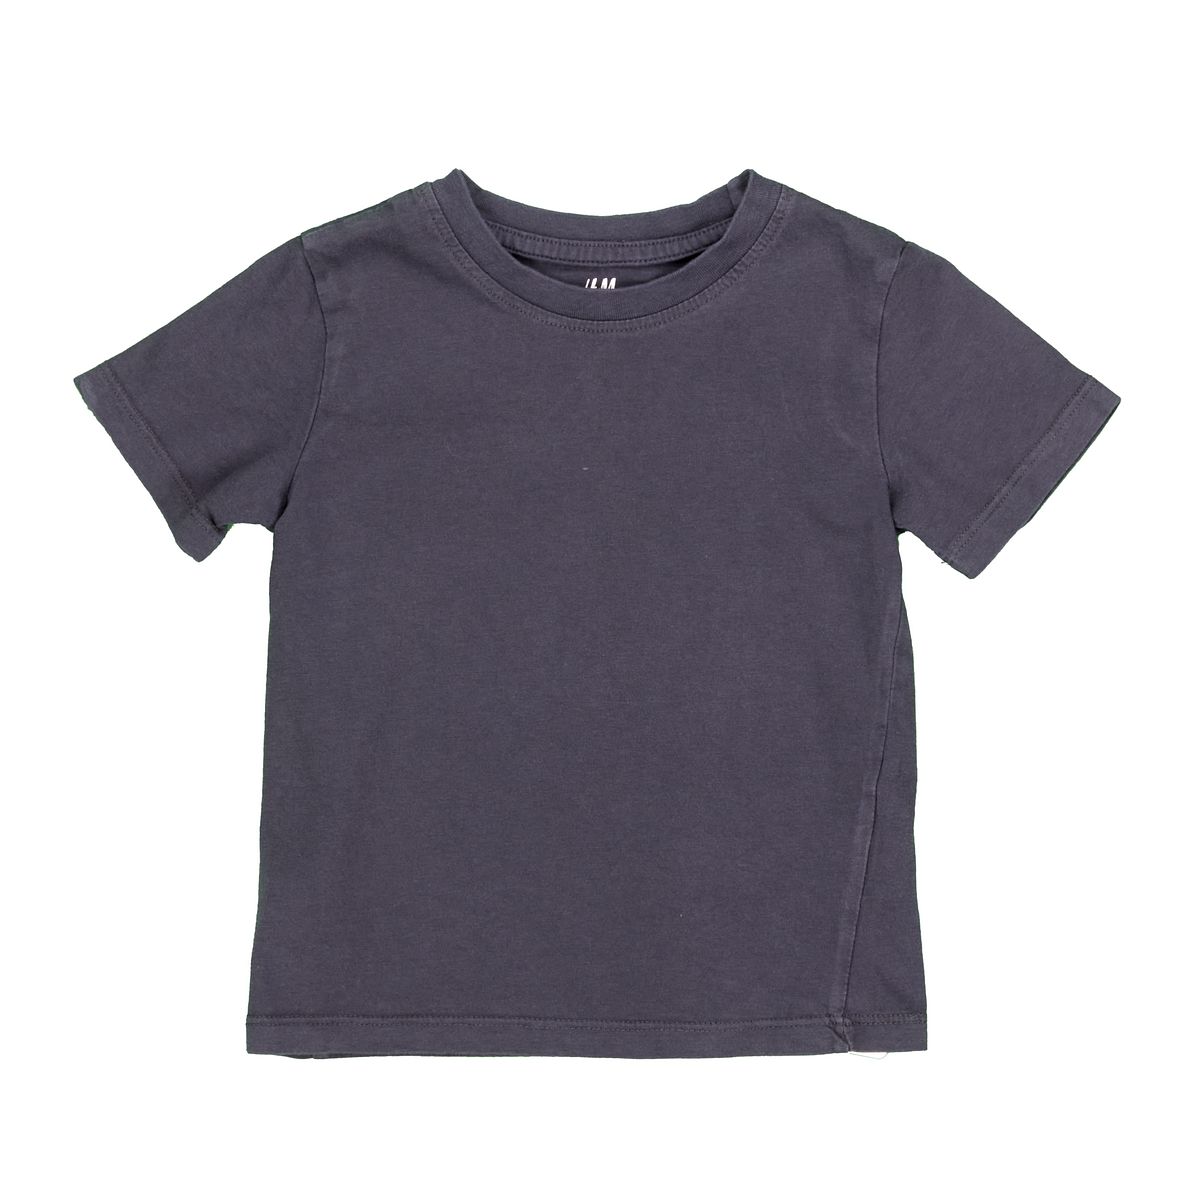 H&M T-Shirt 98 cm front preview